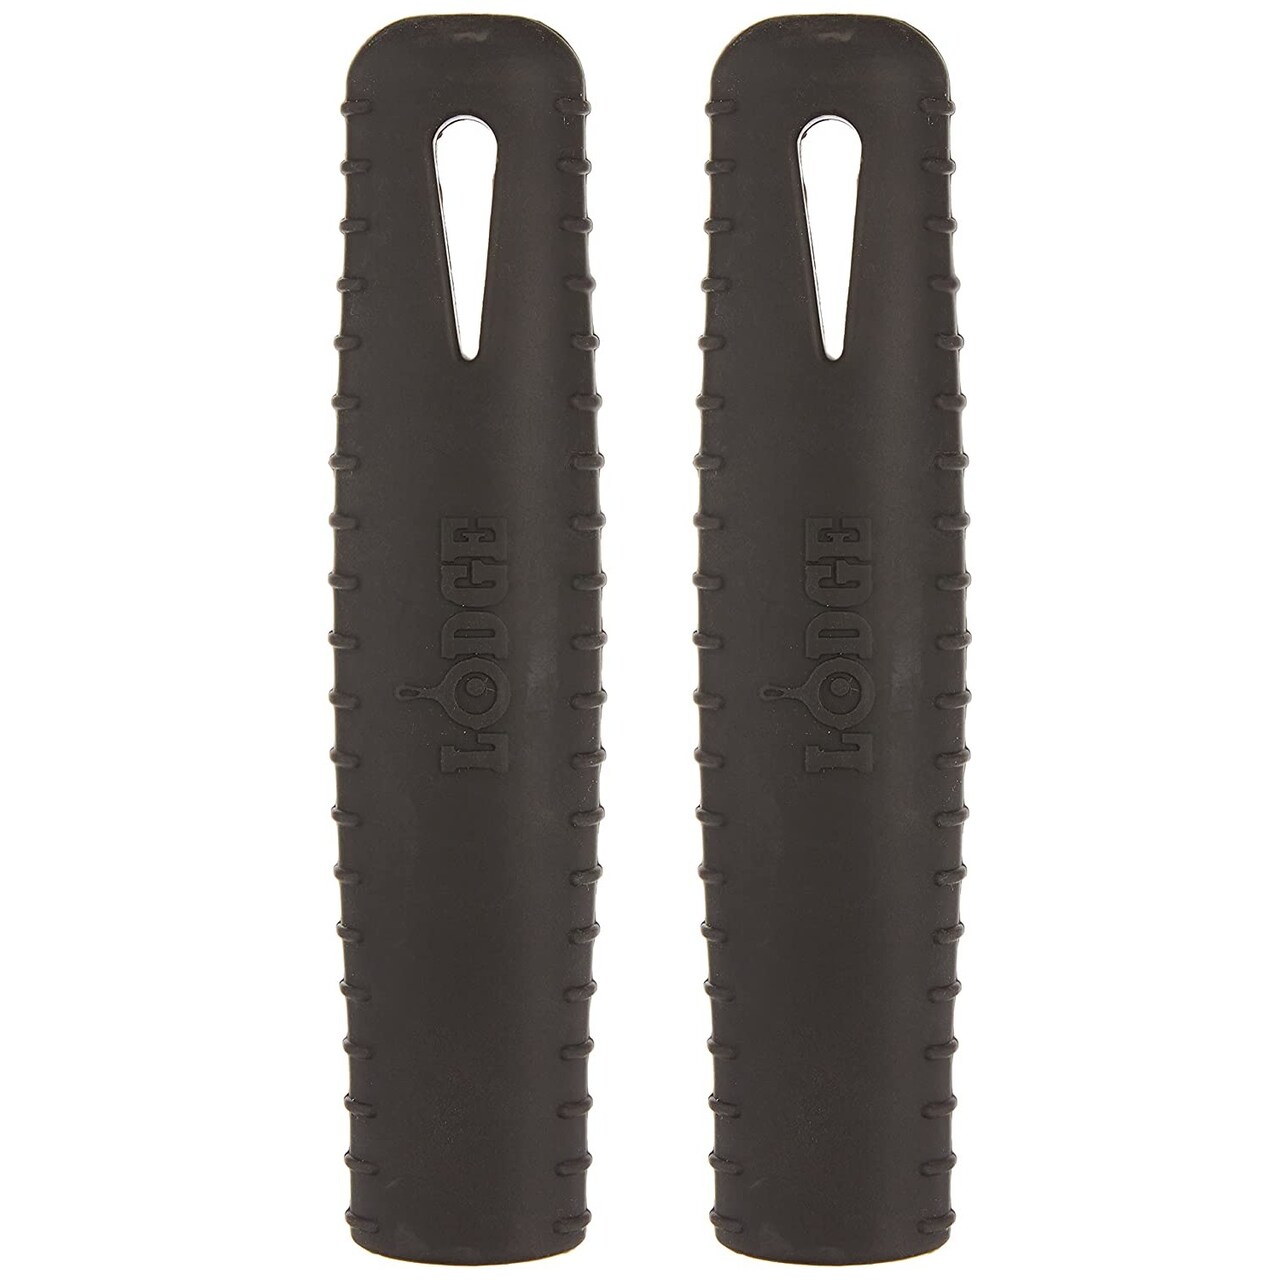 Lodge Hot Pot Skillet Handle Holder Silicone Non-Slip Pack of 2 Black